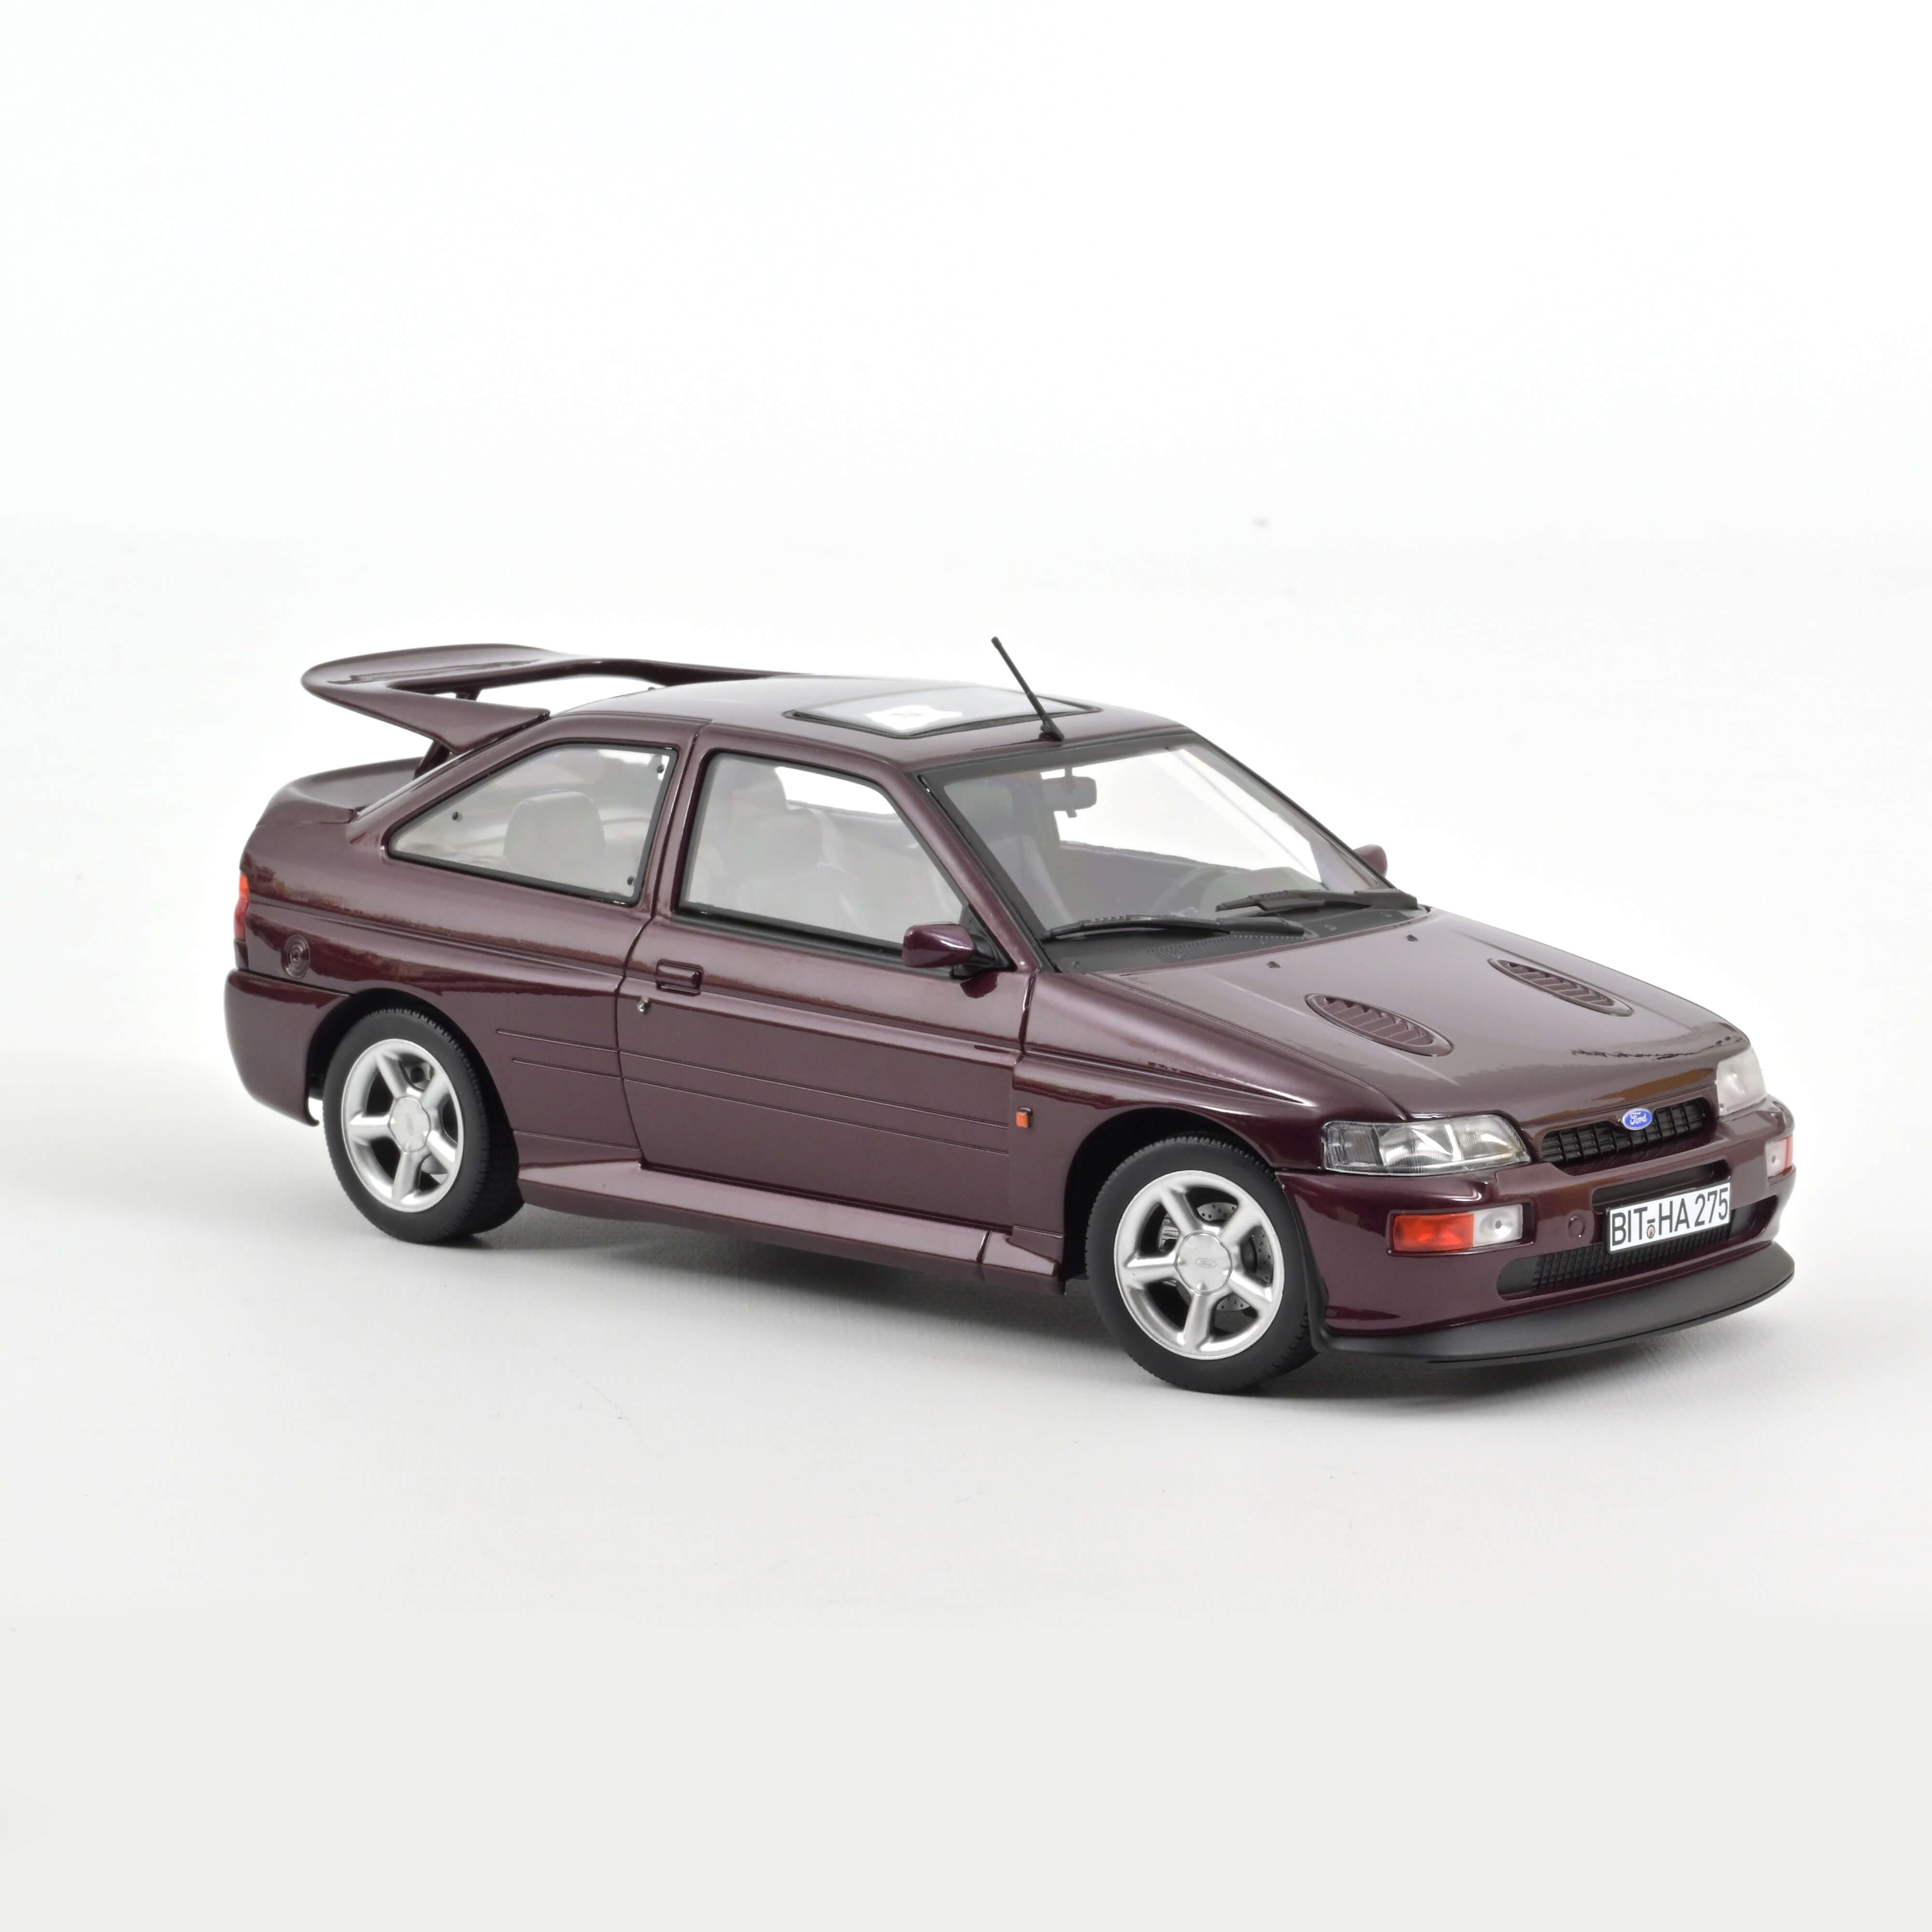 Ford Escort Cosworth 1992 – Purple metallic